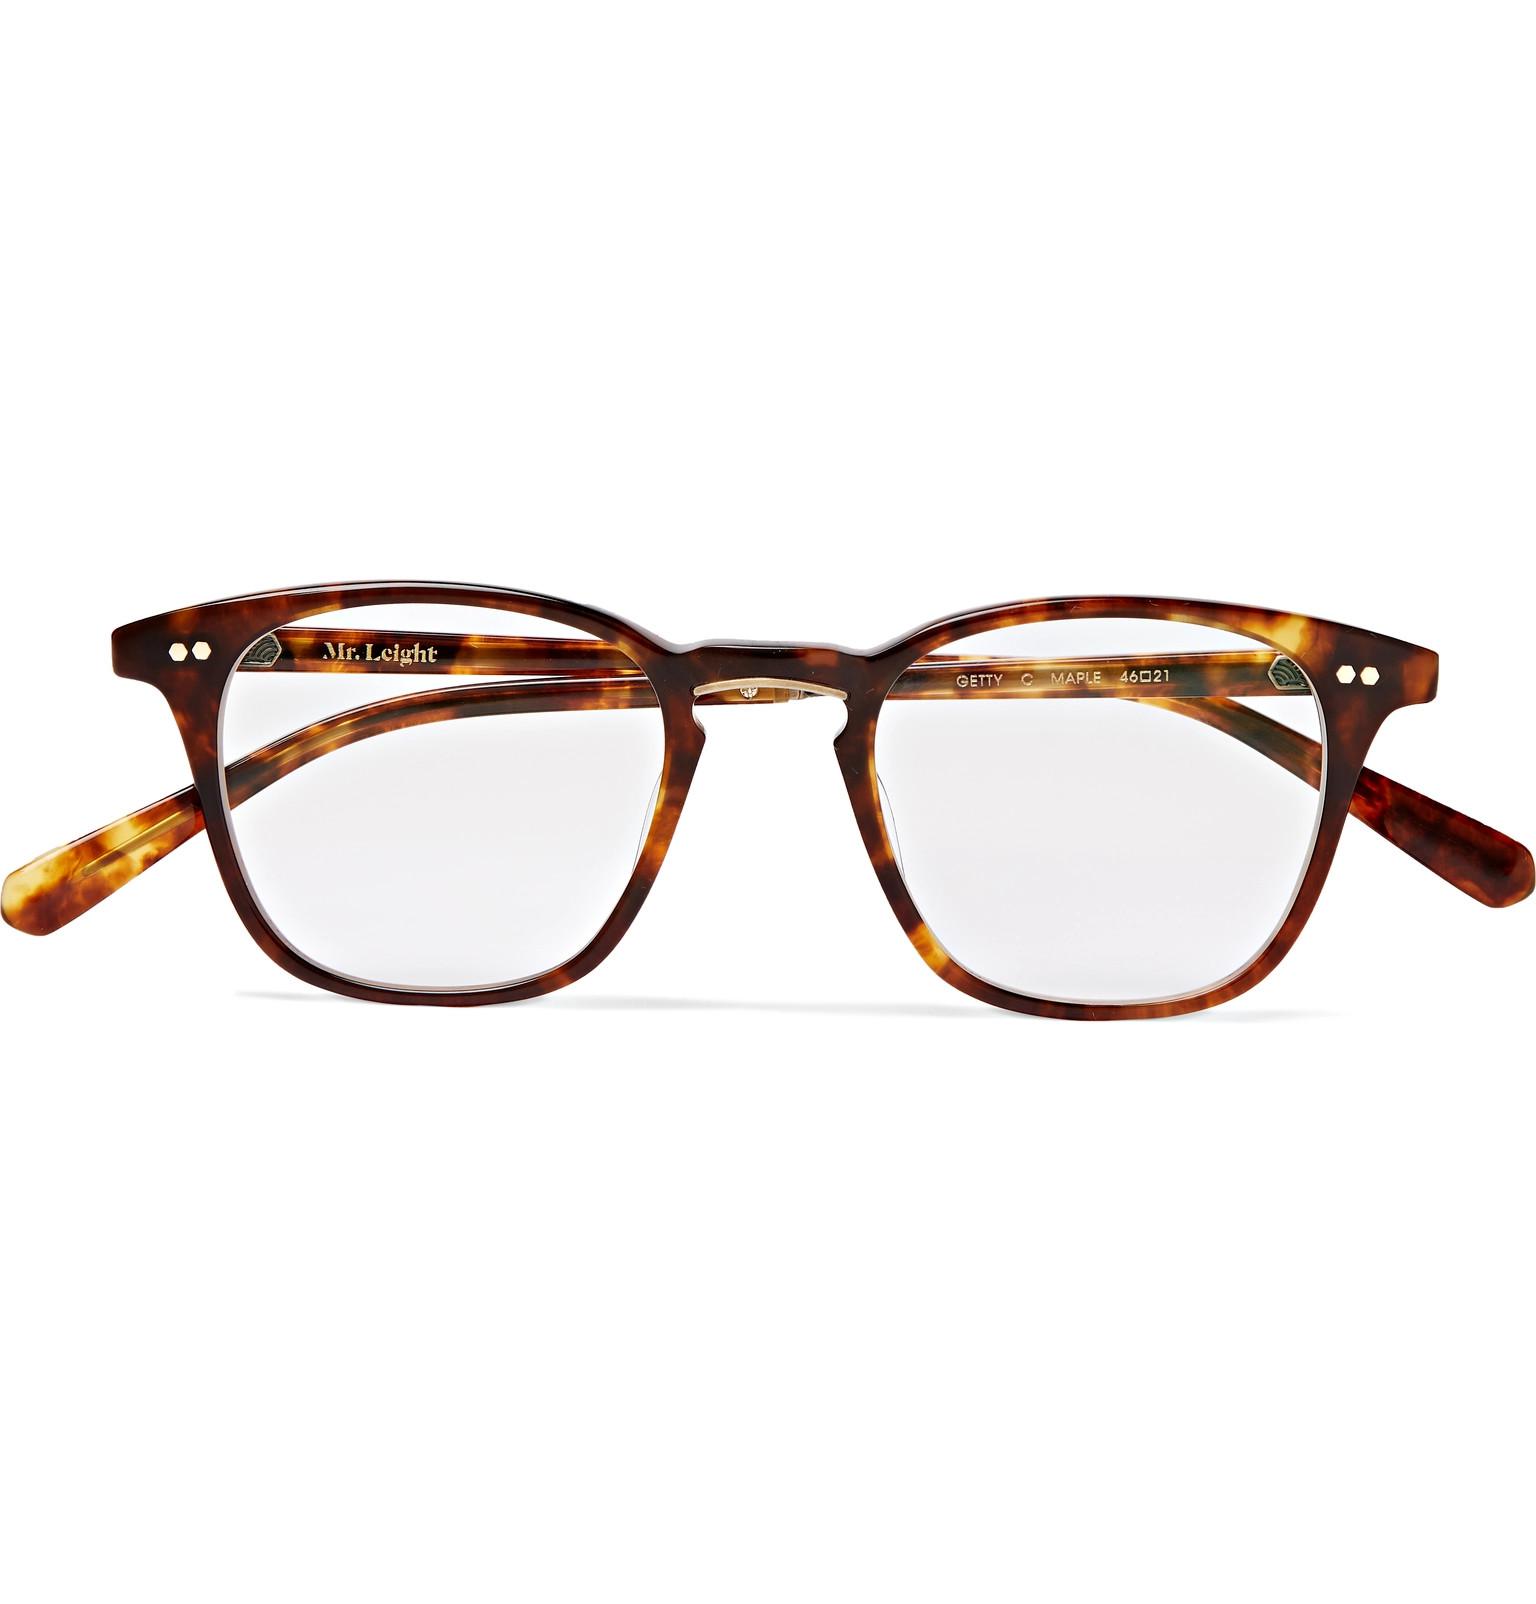 Mr Leight Getty C Square Frame Tortoiseshell Acetate Optical Glasses